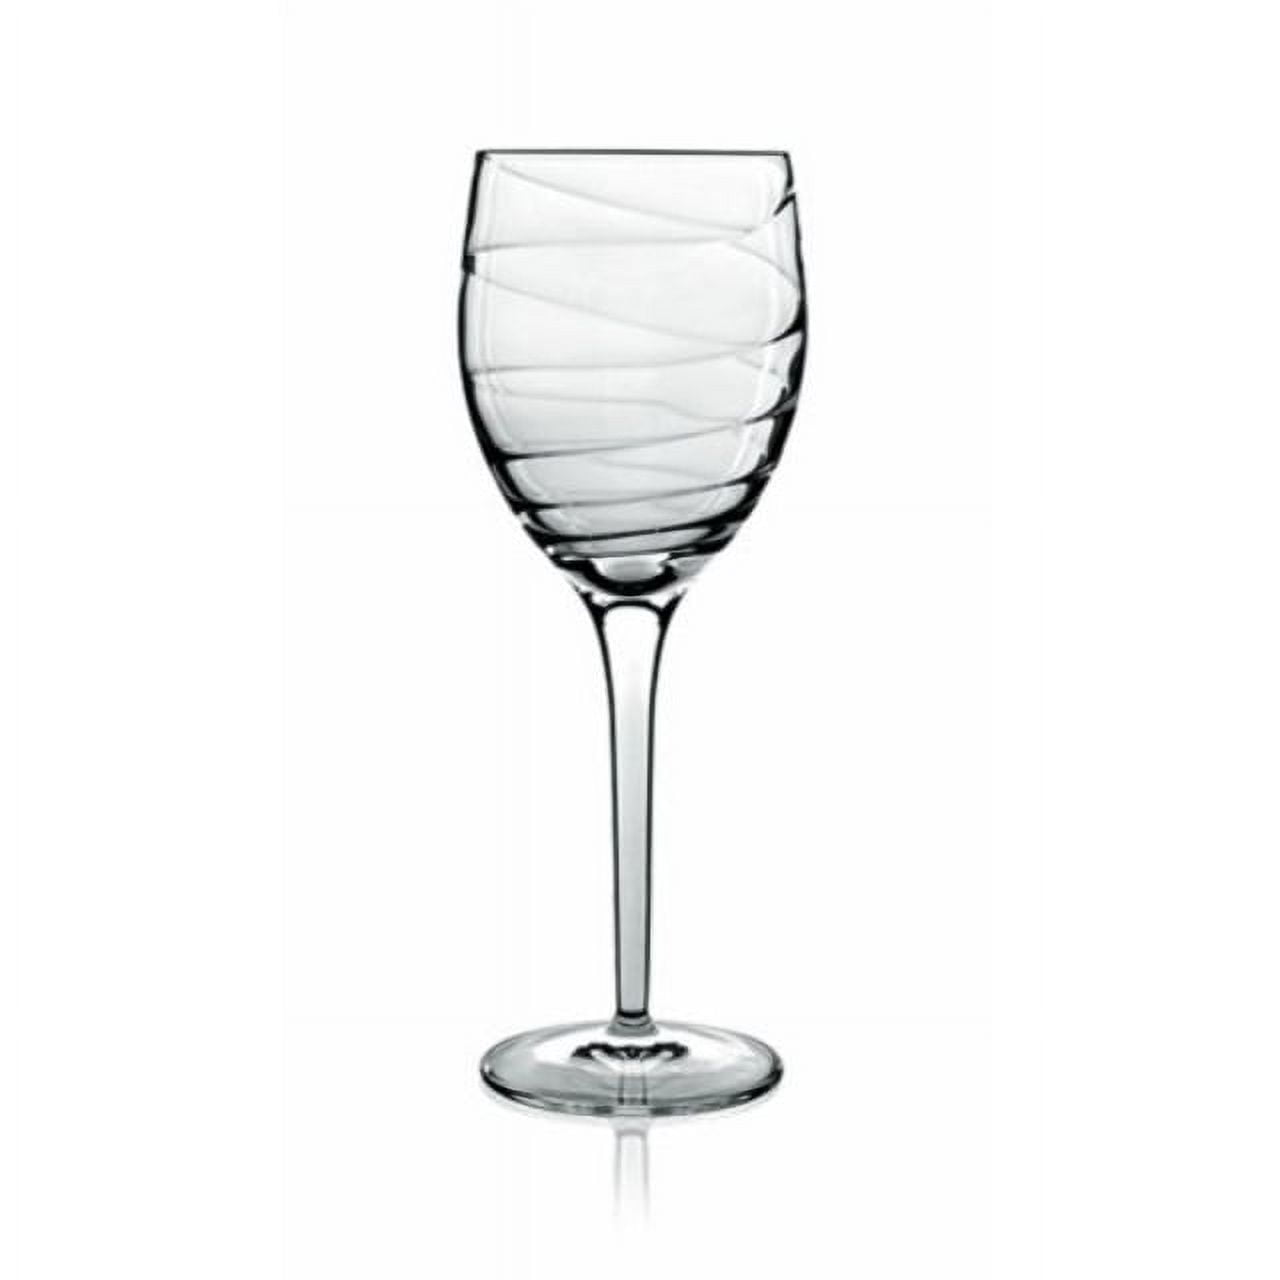 Optica 23.75 oz Bordeaux Red Wine Glasses (Set of 4)– Luigi